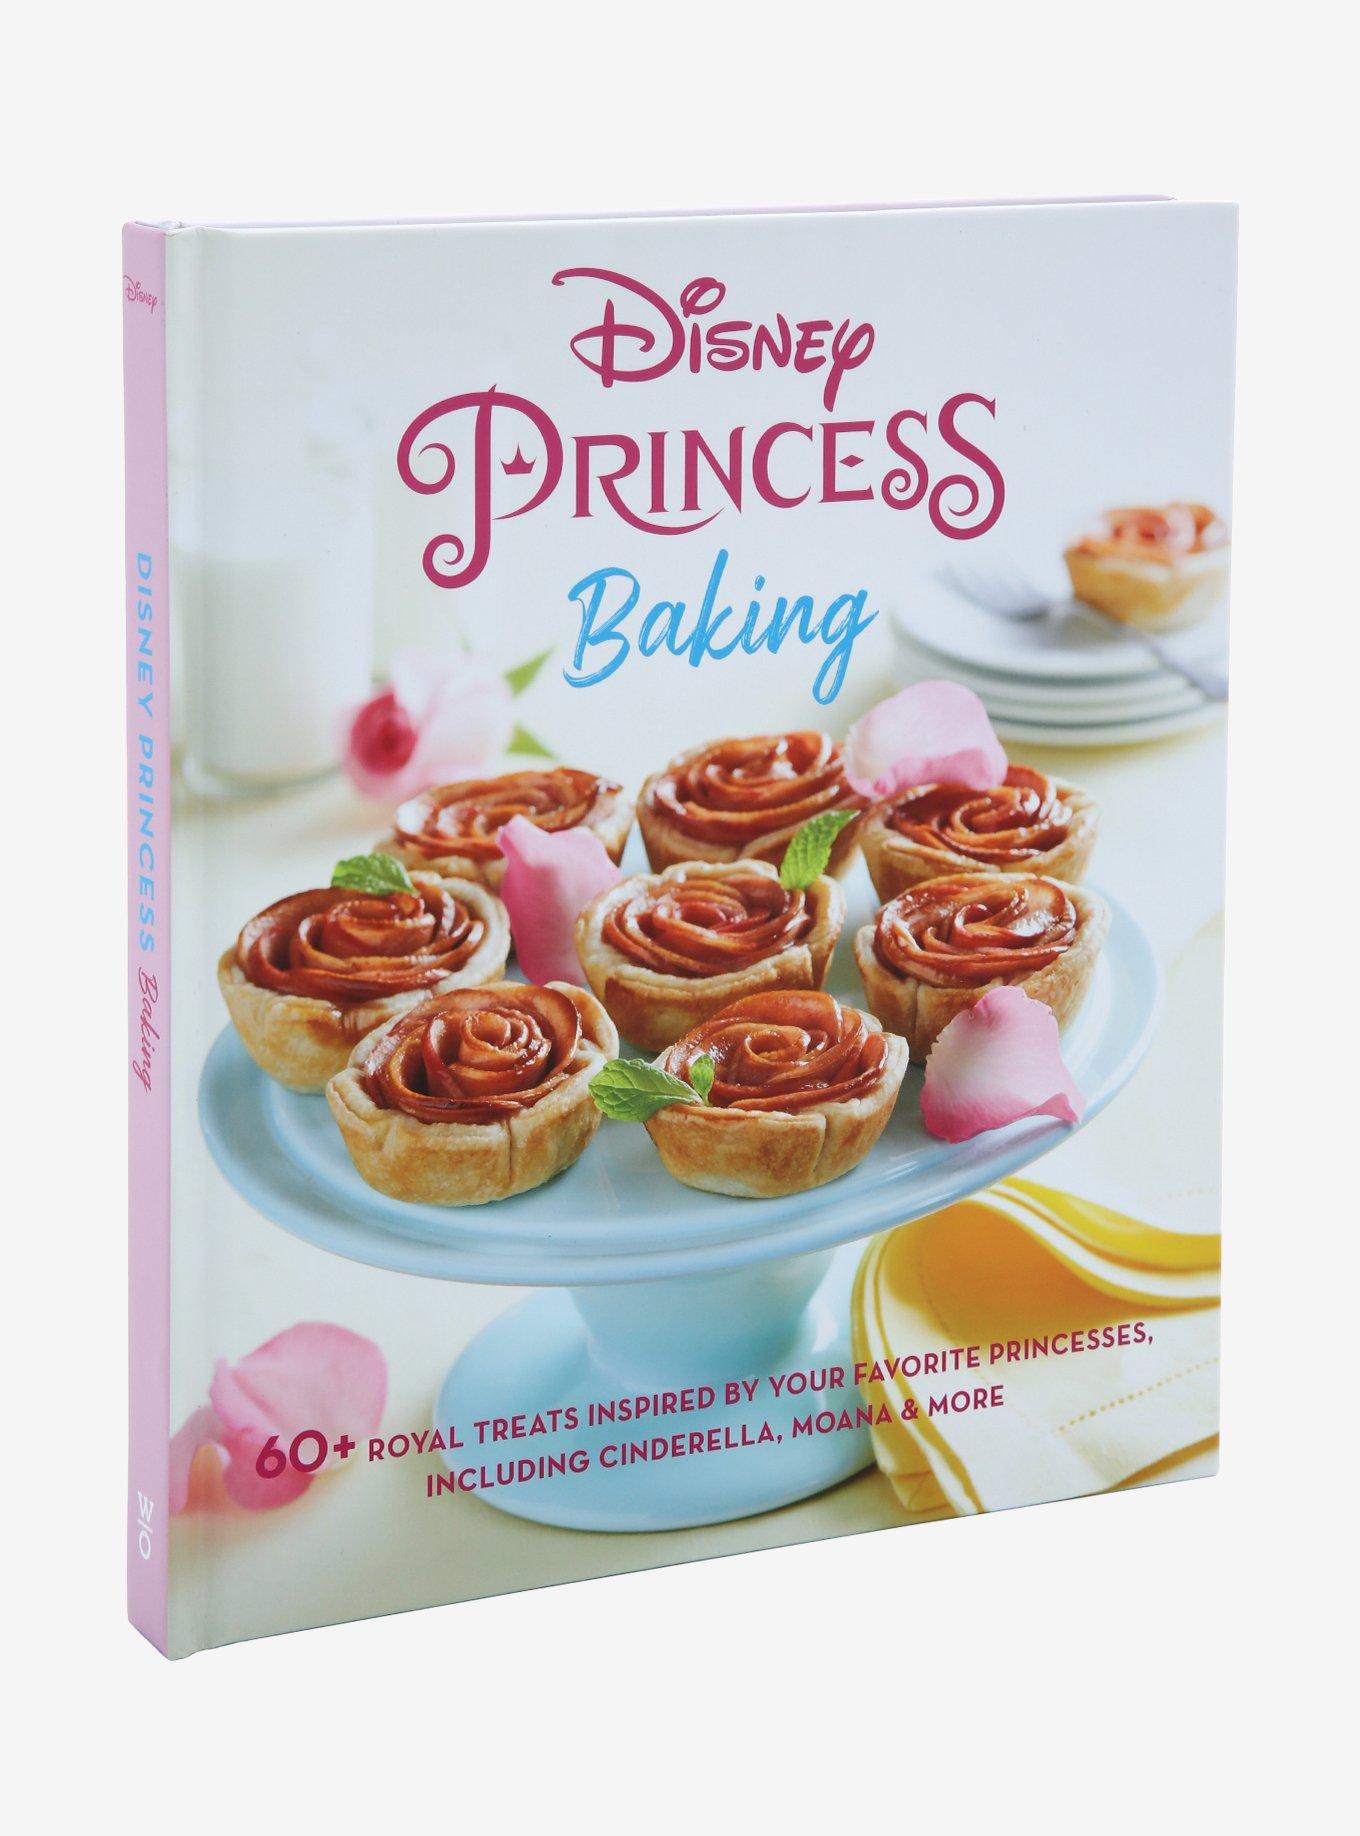 Disney Princess Baking: 60+ Royal Treats Inspired by Your Favorite Princesses, Including Cinderella, Moana & More [Book]